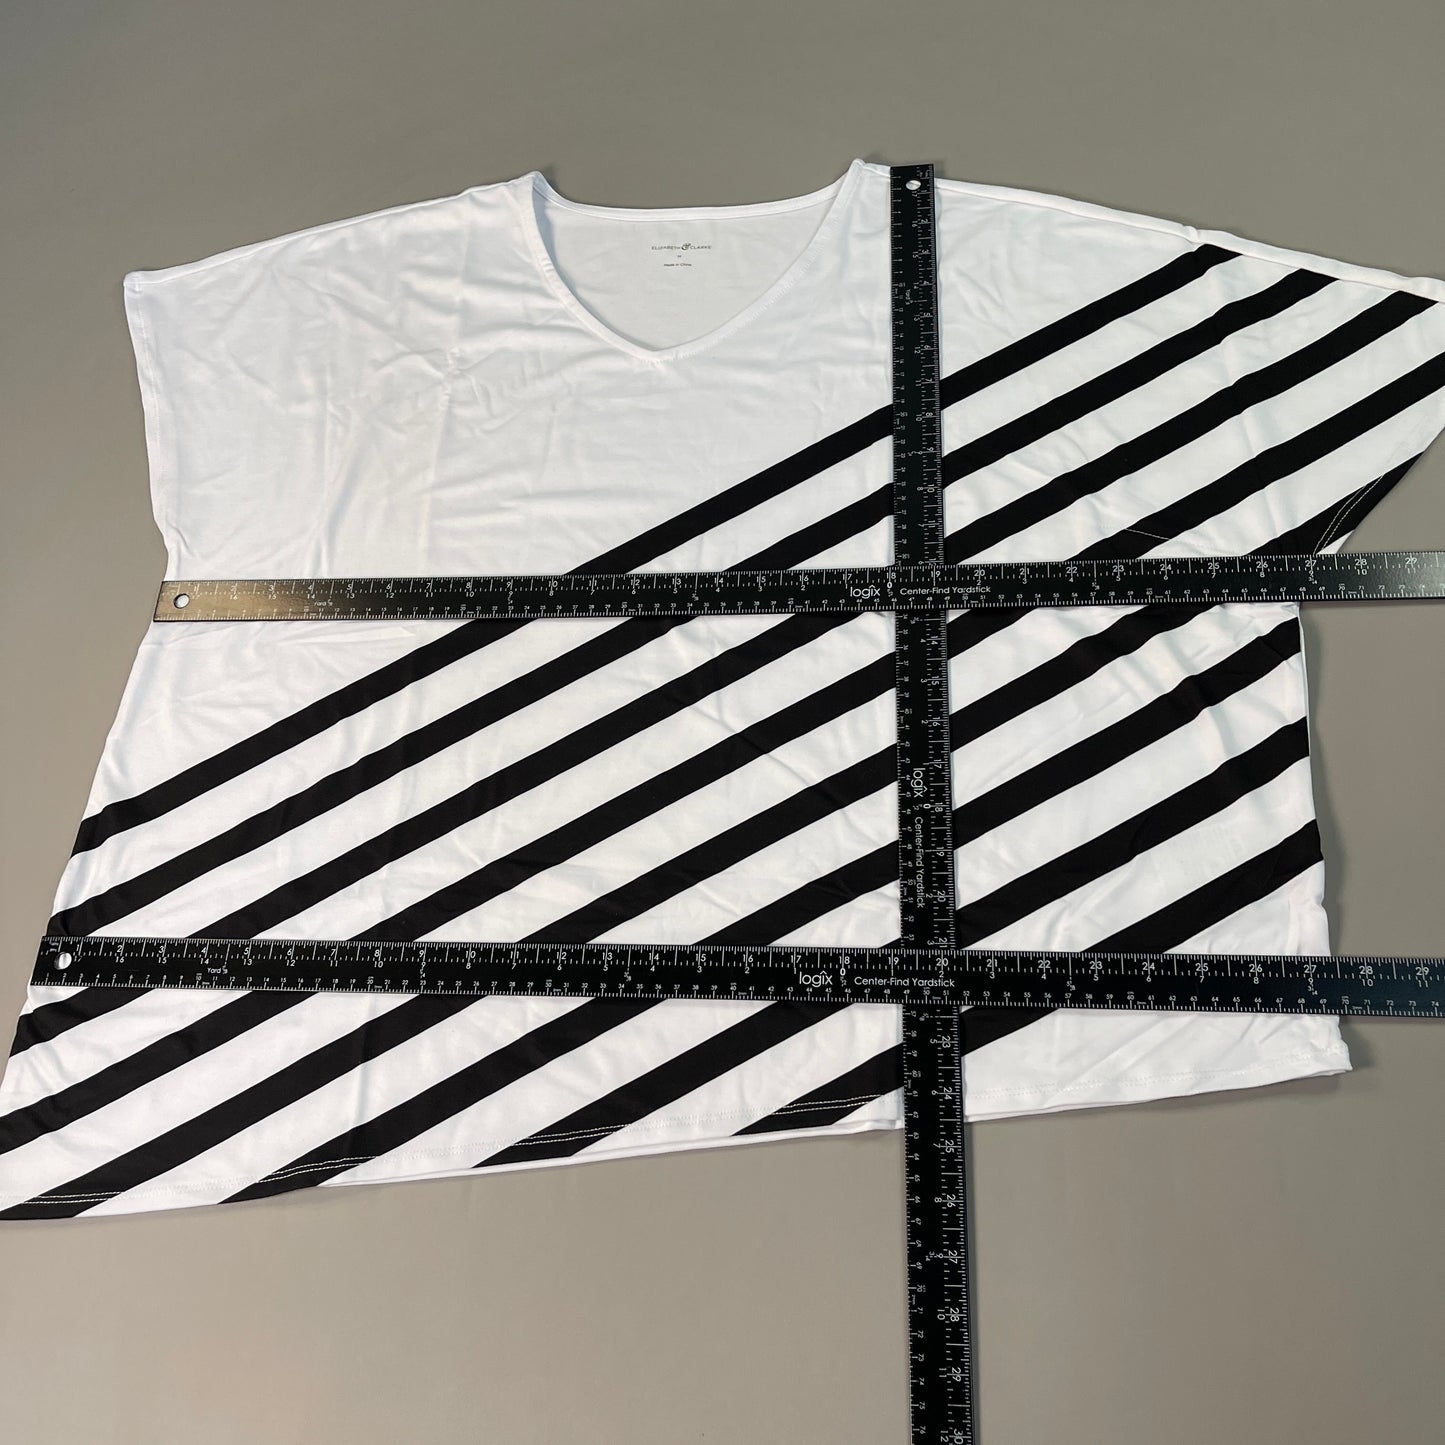 ELIZABETH & CLARK V-Neck Striped Tunic Top W/ Asymmetric Hem Women's Sz M White / Black Striped (New)